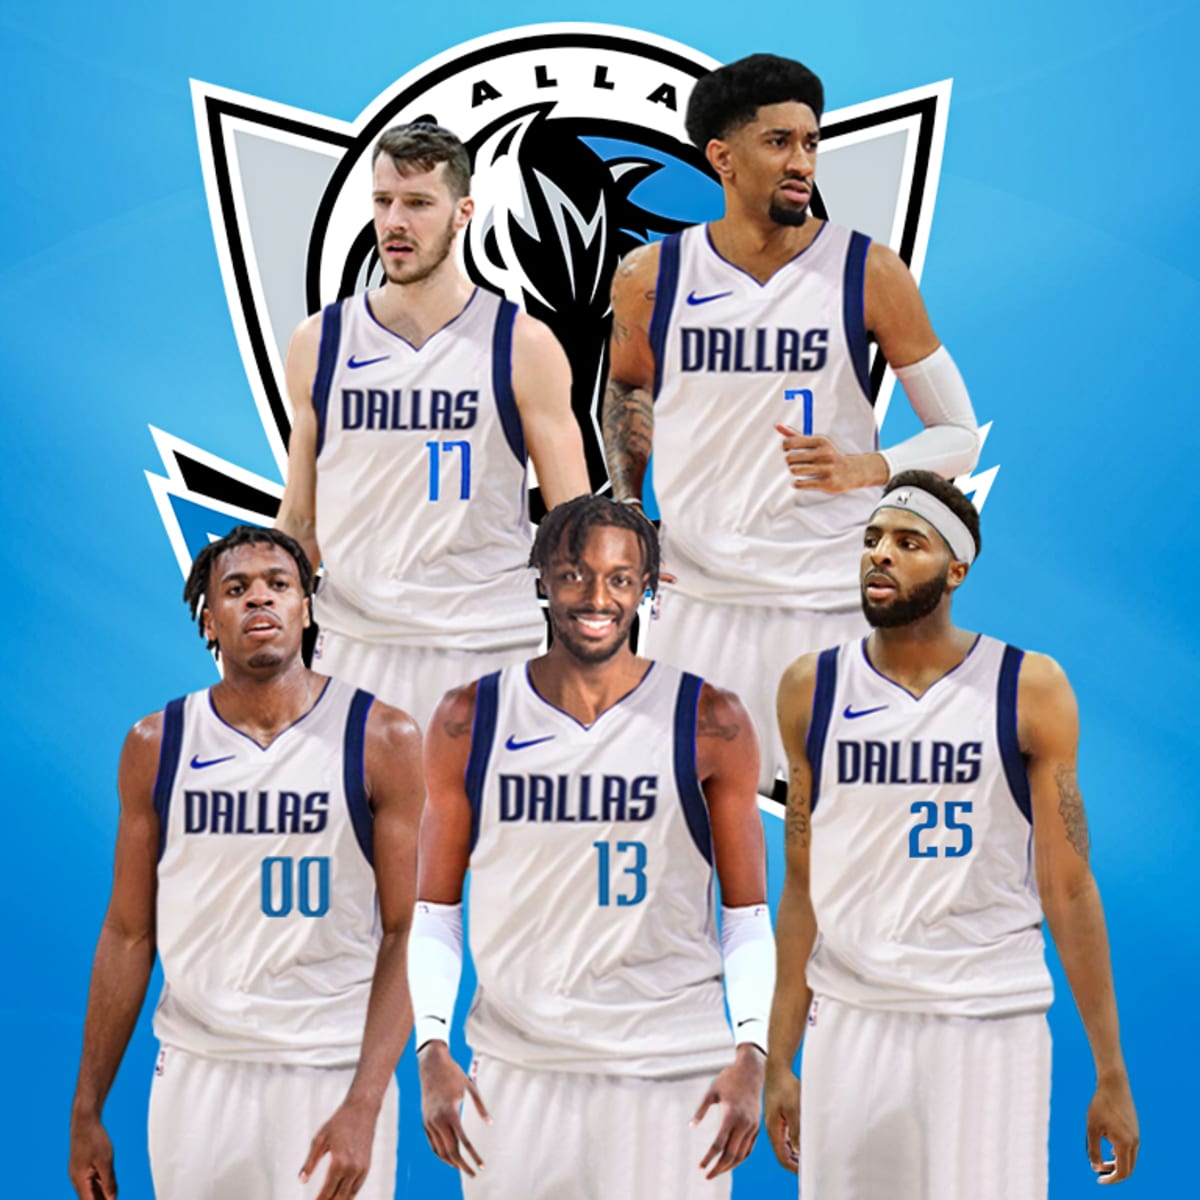 NBA Trade Rumors: 5 Big Men The Dallas Mavericks Should Target